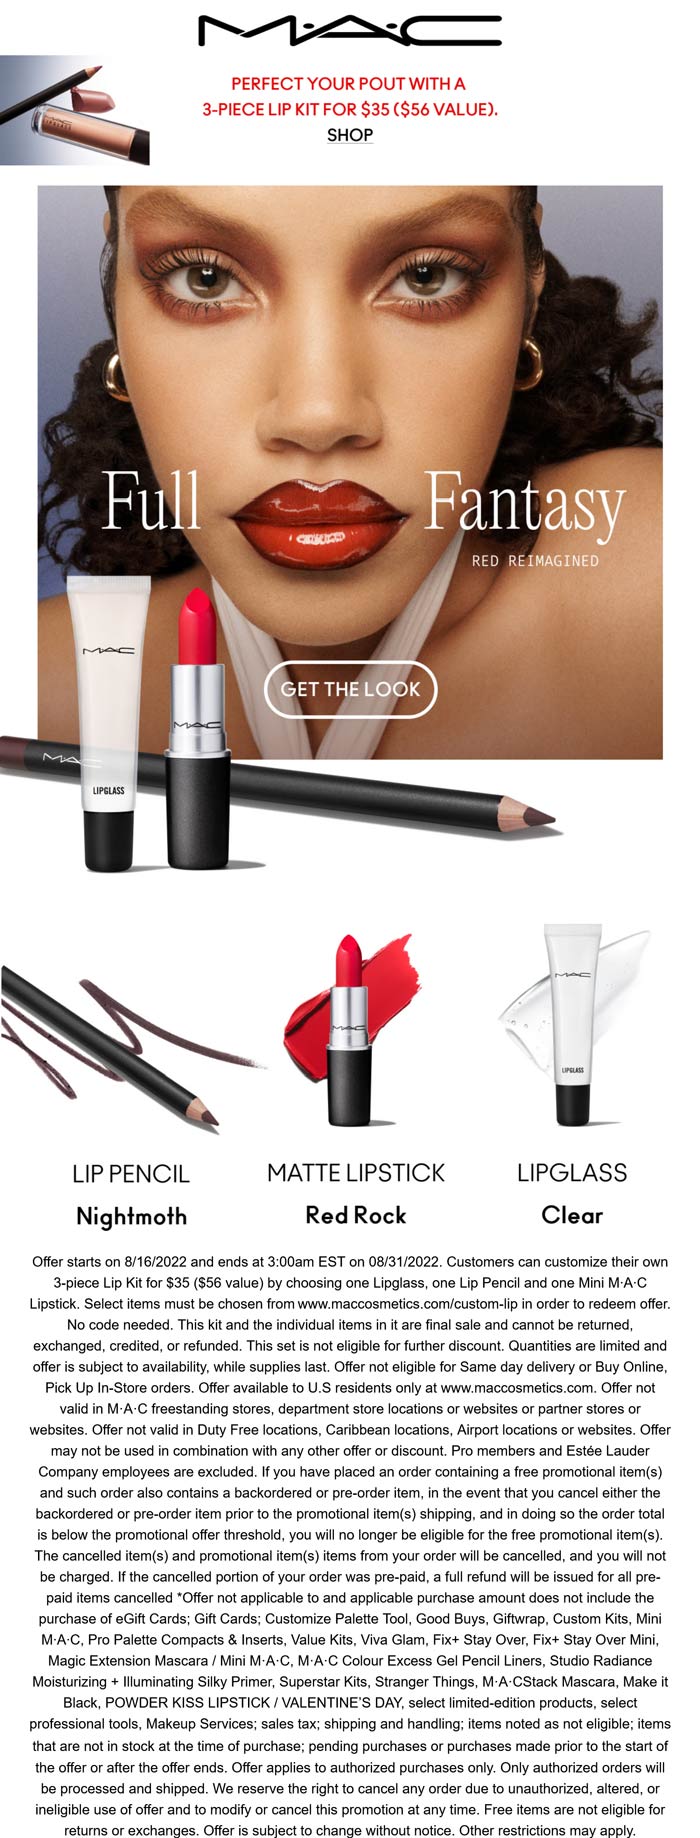 MAC stores Coupon  3-piece lip kit for $35 at MAC cosmetics #mac 